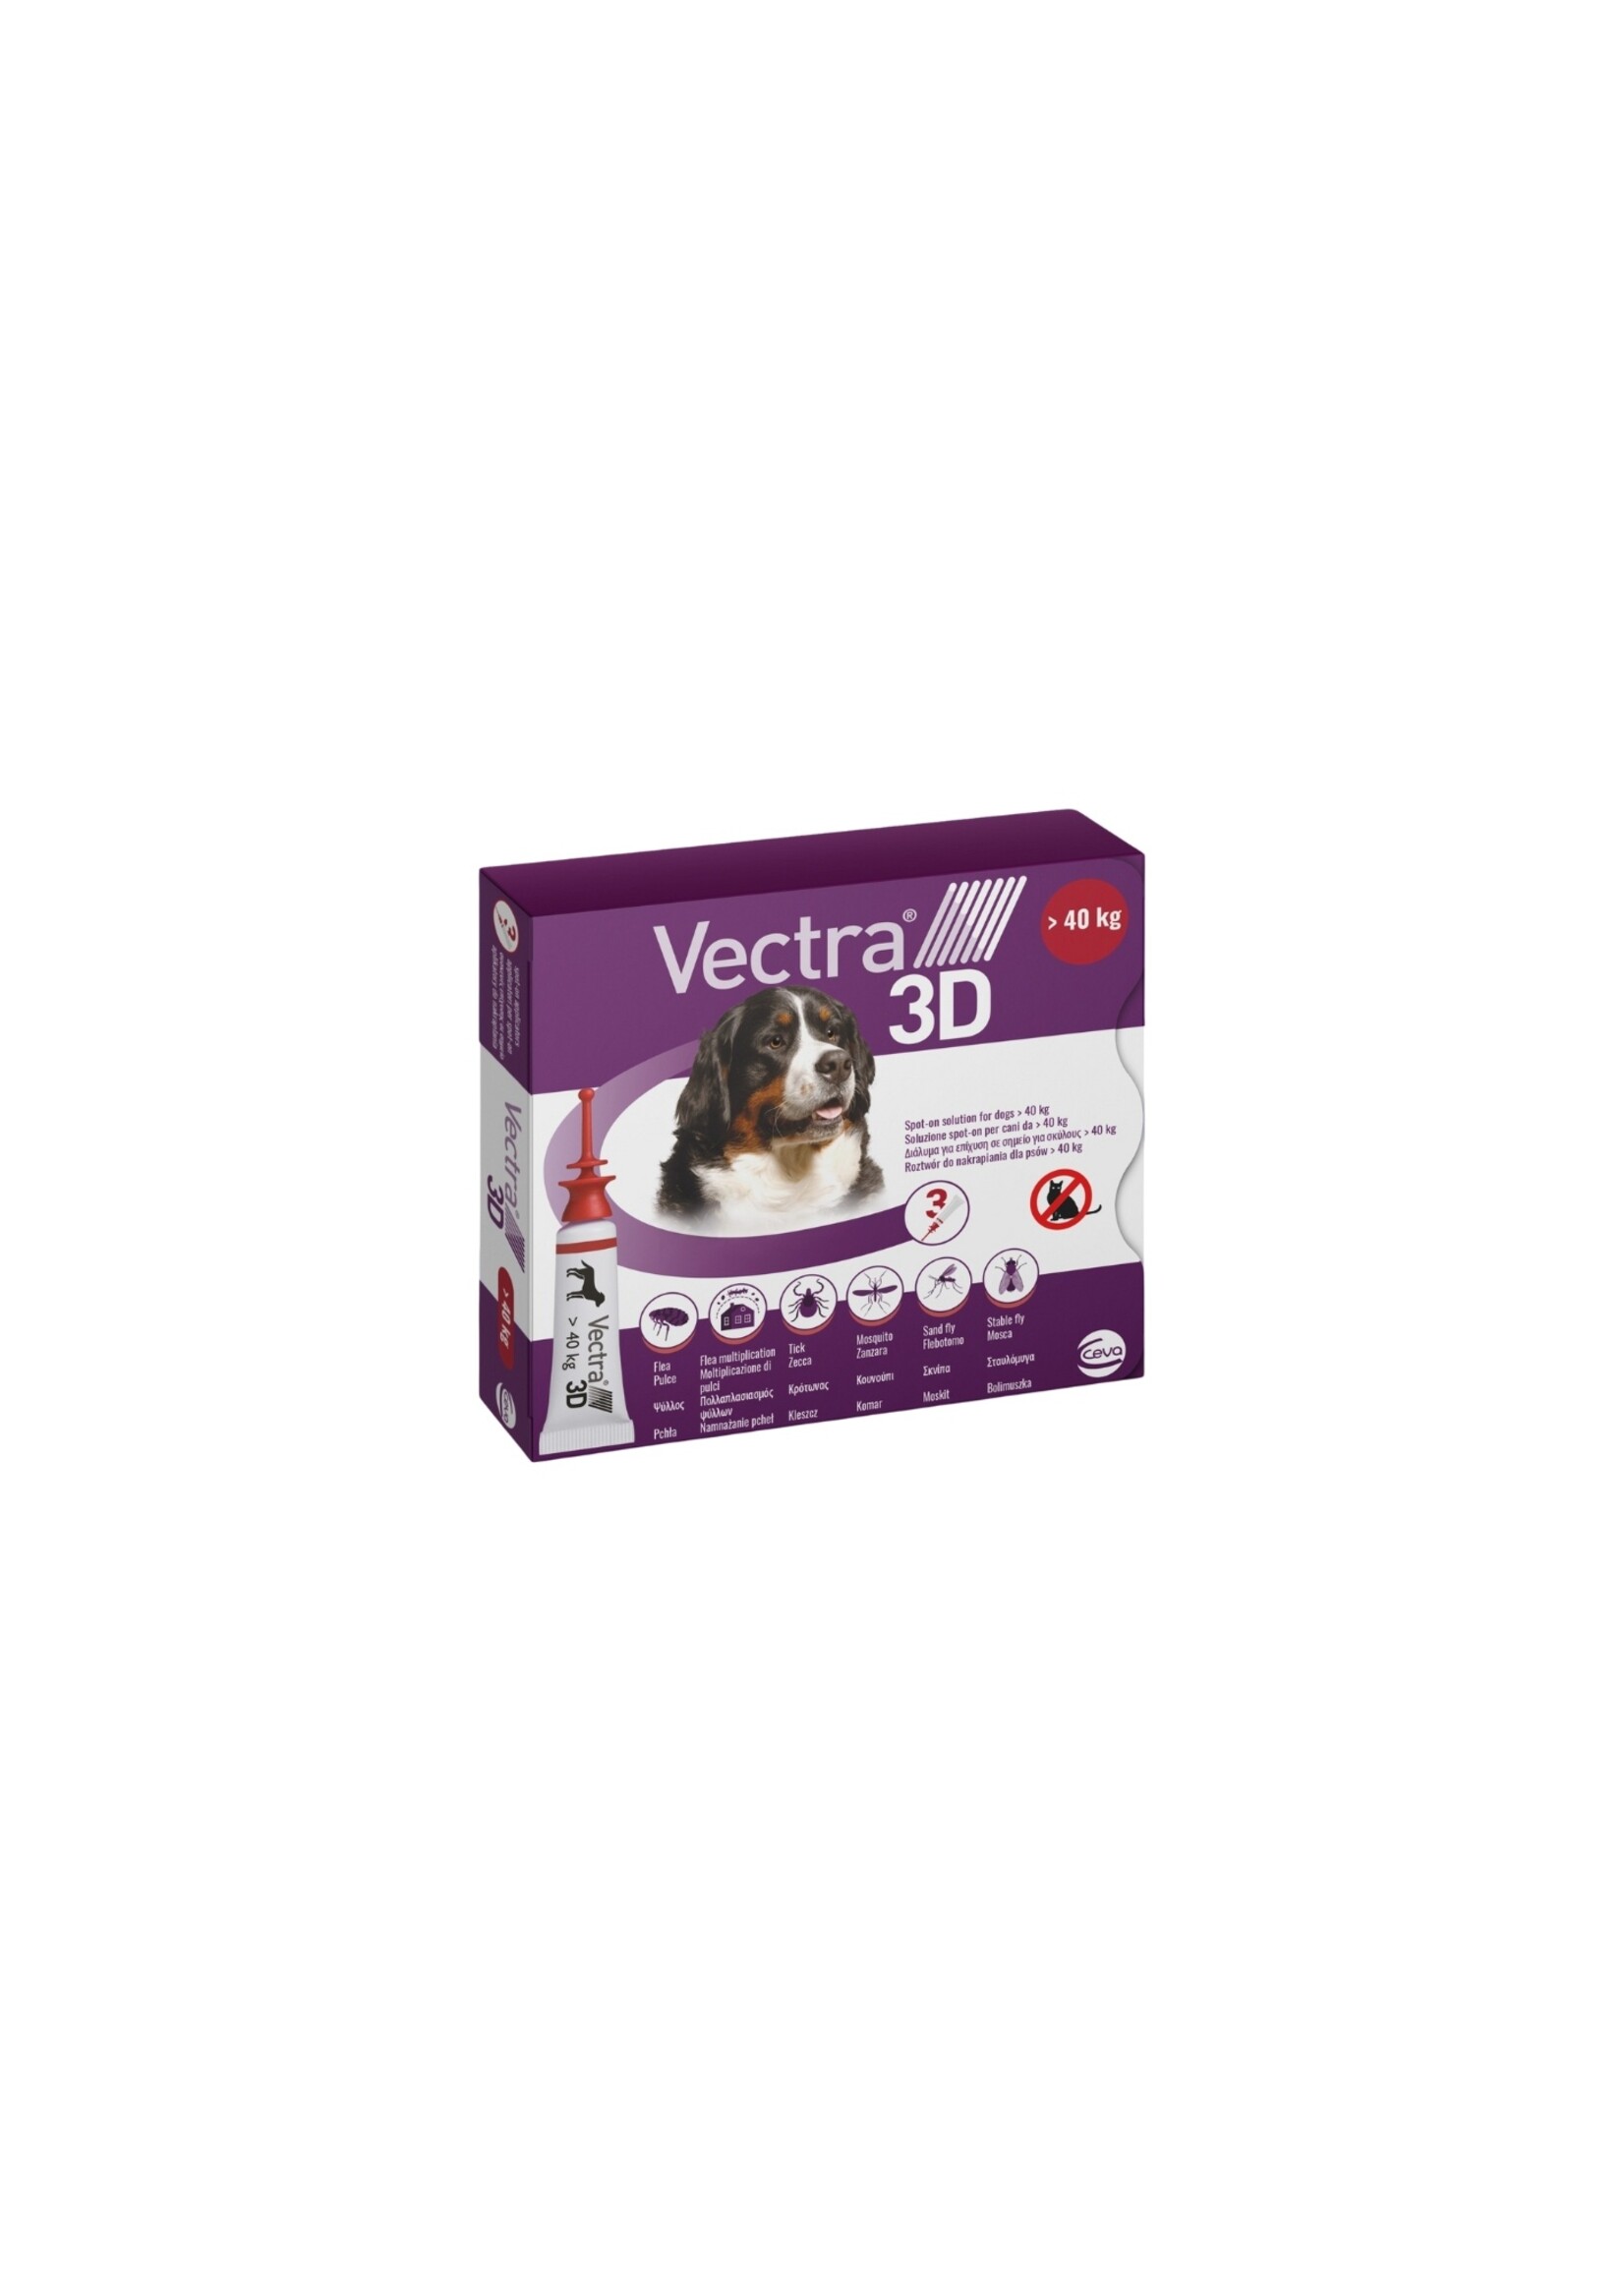 Vectra 3D | Spot-on für Hunde